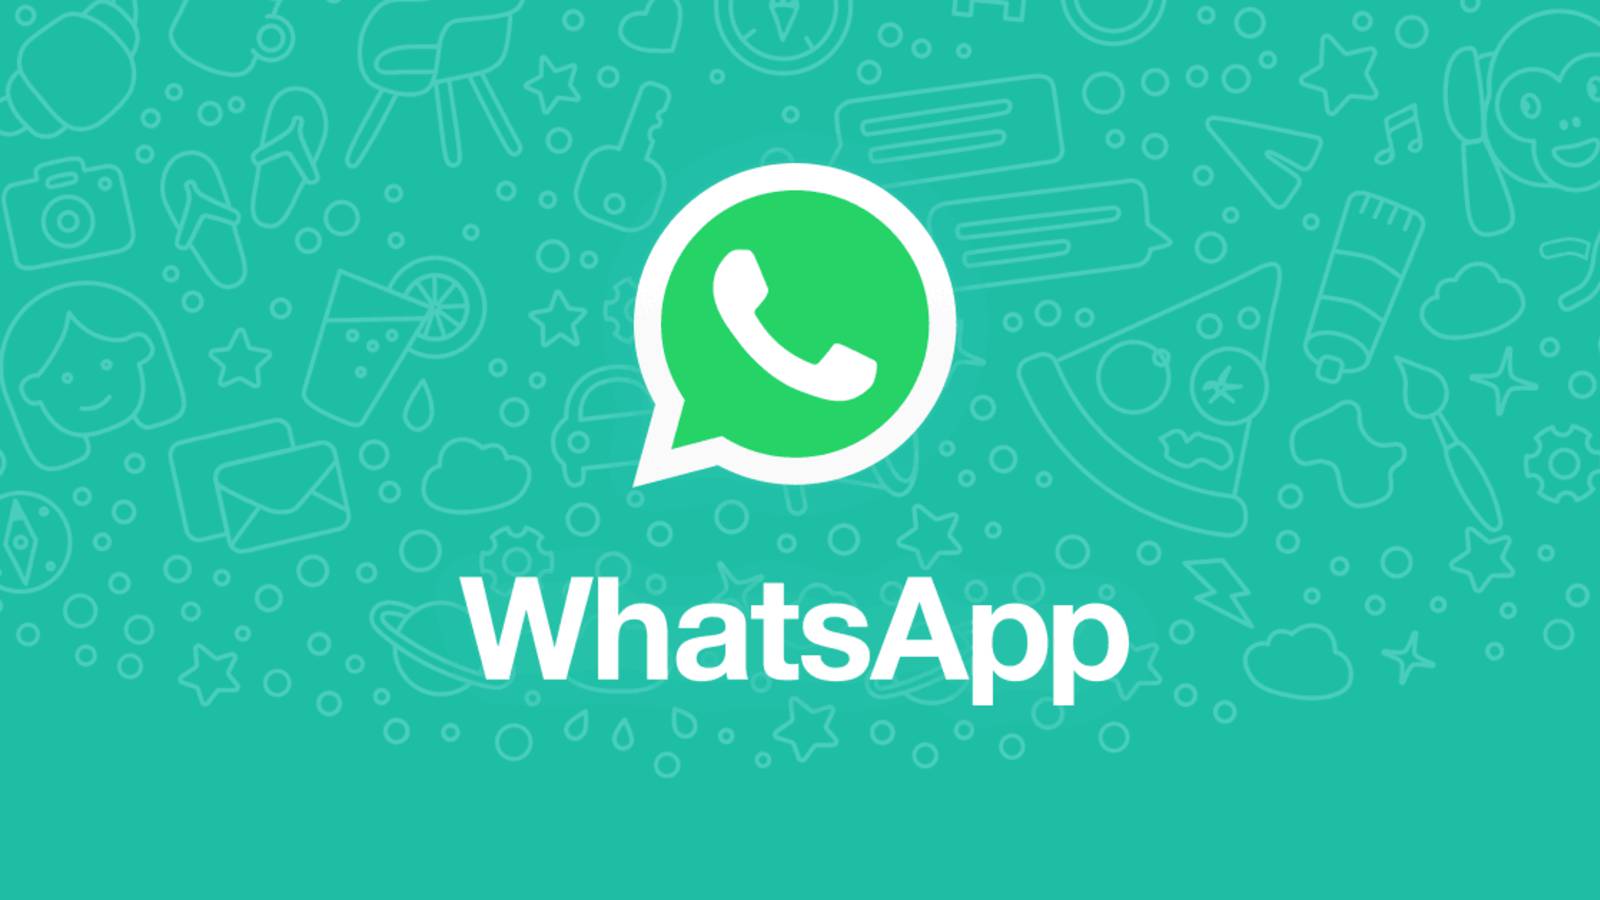 WhatsApp preventie